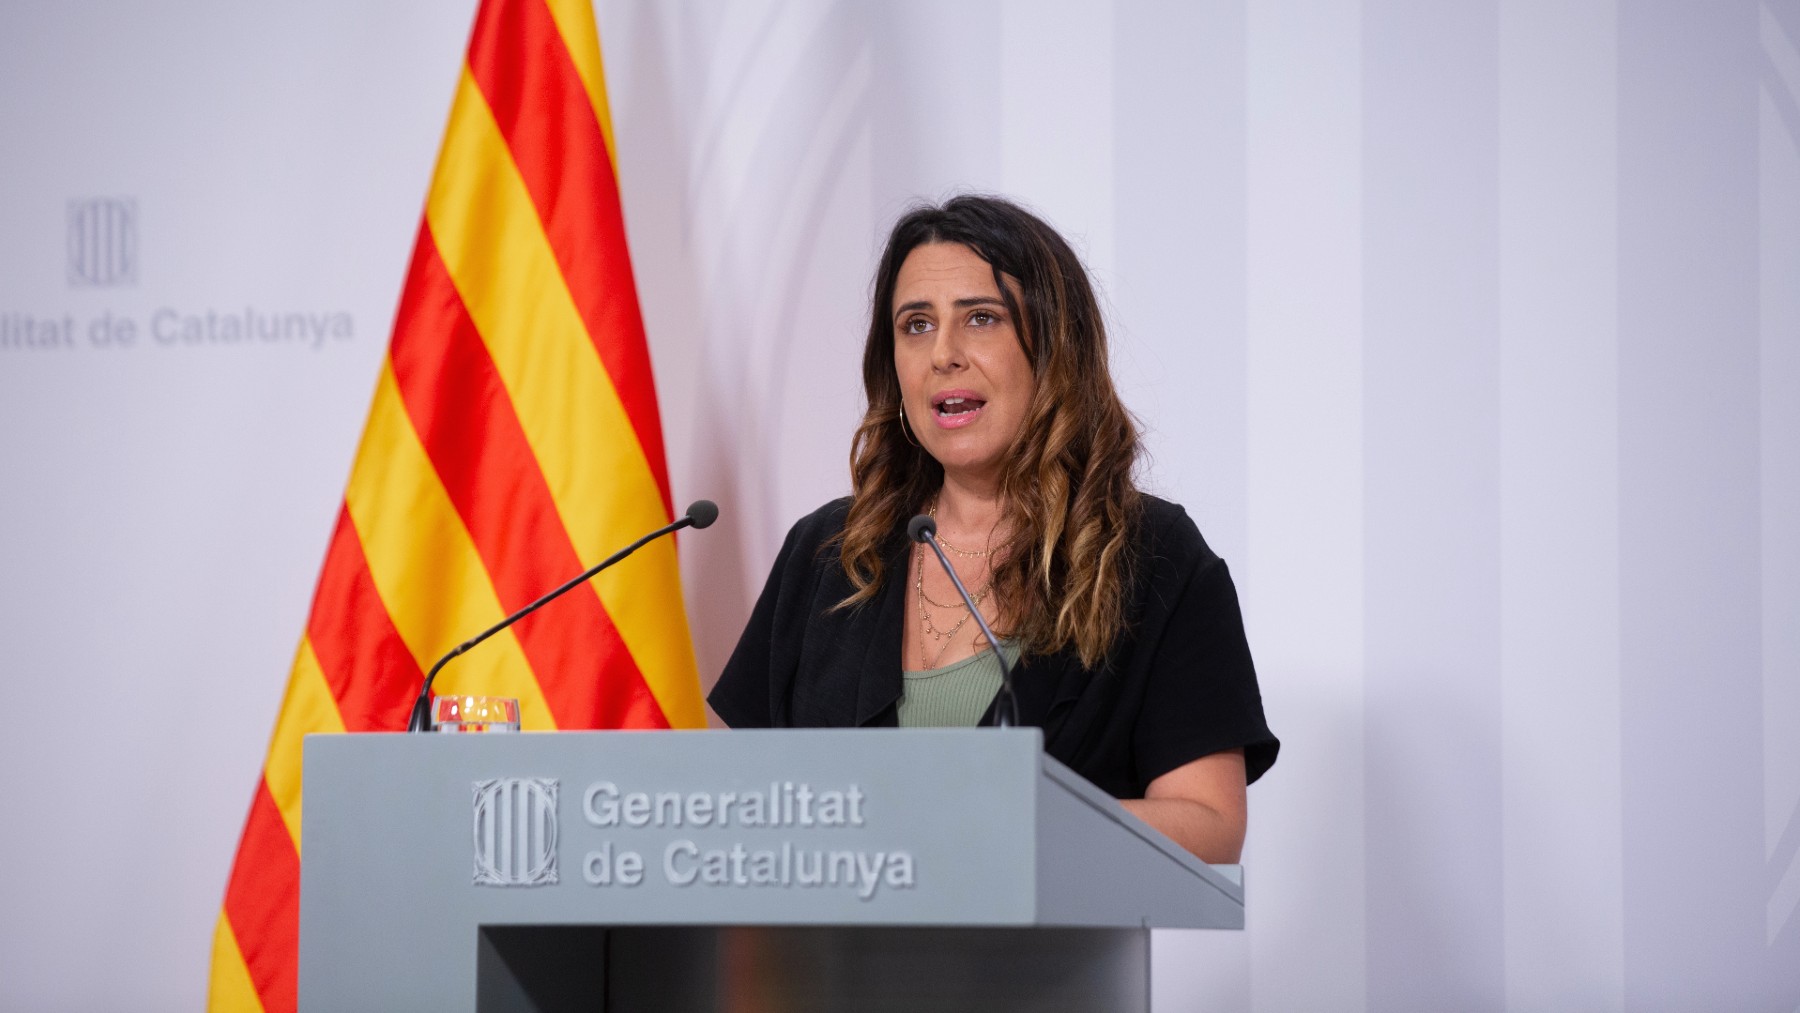 La portavoz del Govern de Cataluña, Patrícia Plaja. (Foto: EP)